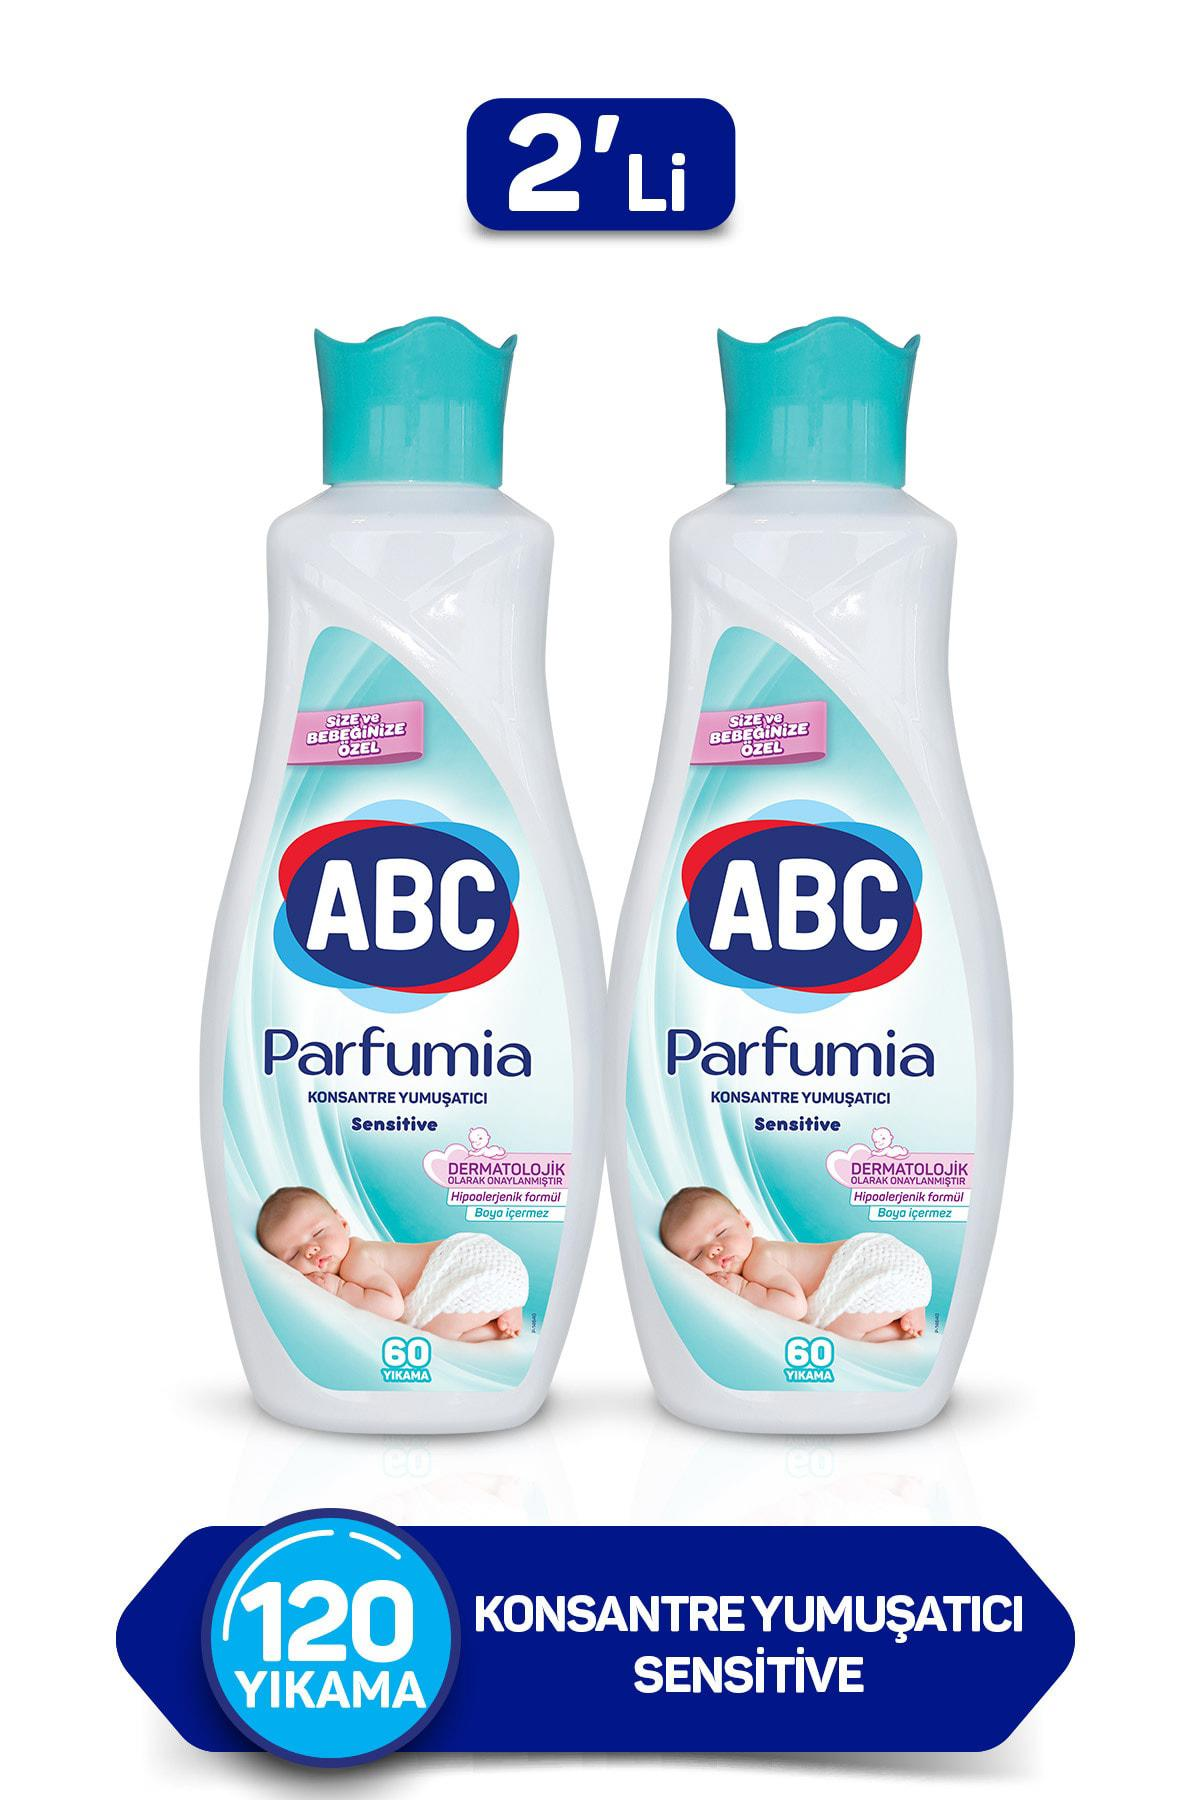 ABC Parfumia Sensitive Konsantre 60 Yıkama Yumuşatıcı 2 x 1.44 lt